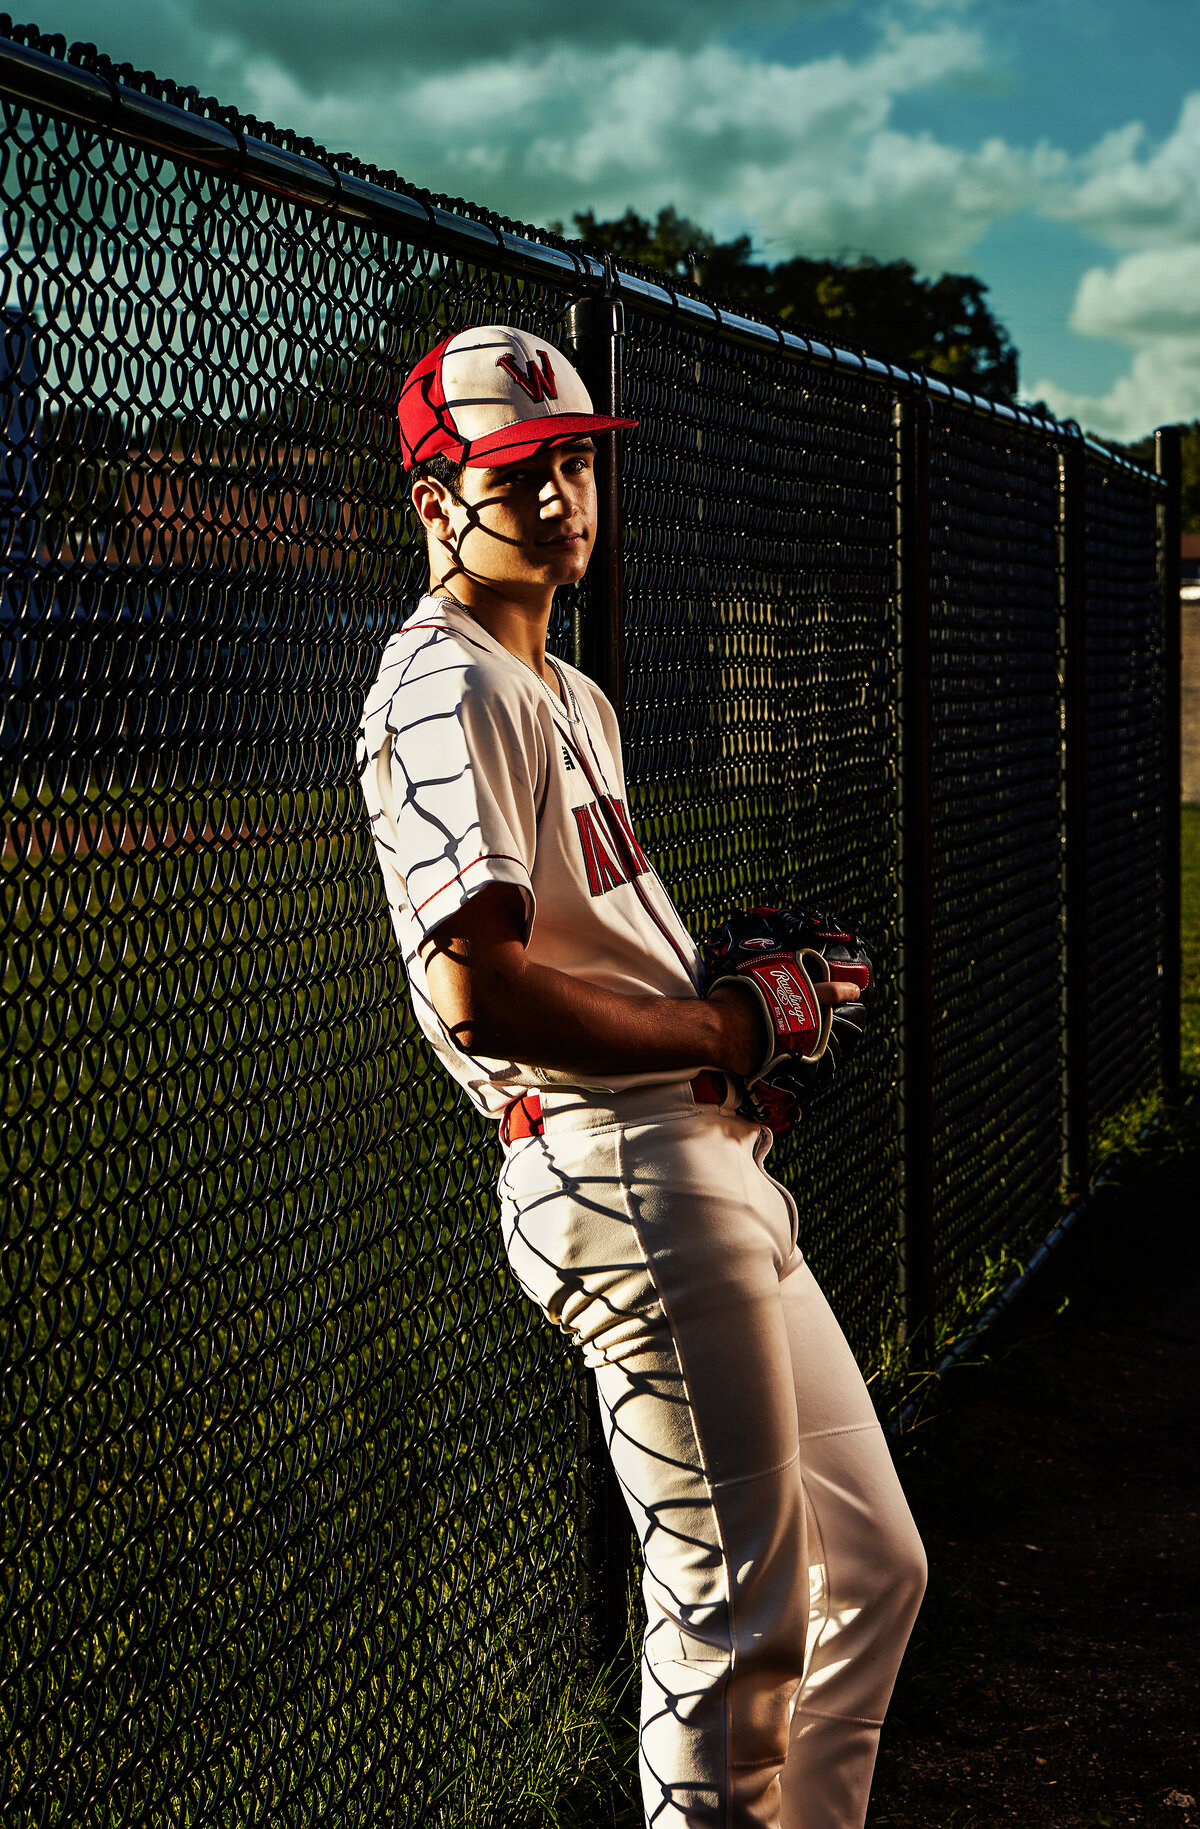 boy in baseball cool sports photo - Kristen Zannella Photography